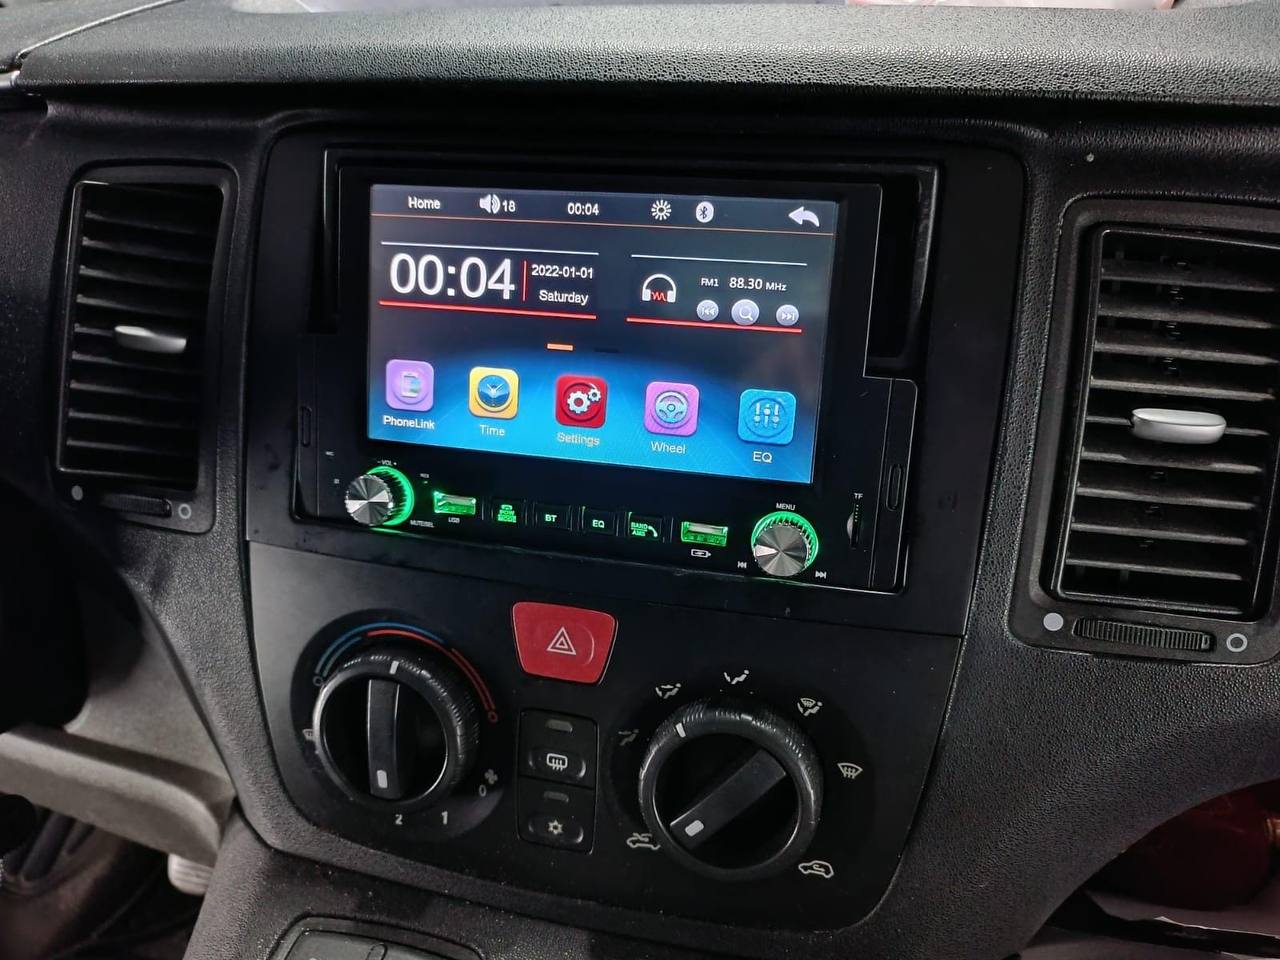 Autoradio per Fiat idea/Lancia Musa [2003-2008] - 1Din 6.2" Pollici, Bluetooth, Radio, Doppia USB, Mirror Link Android e IOS.